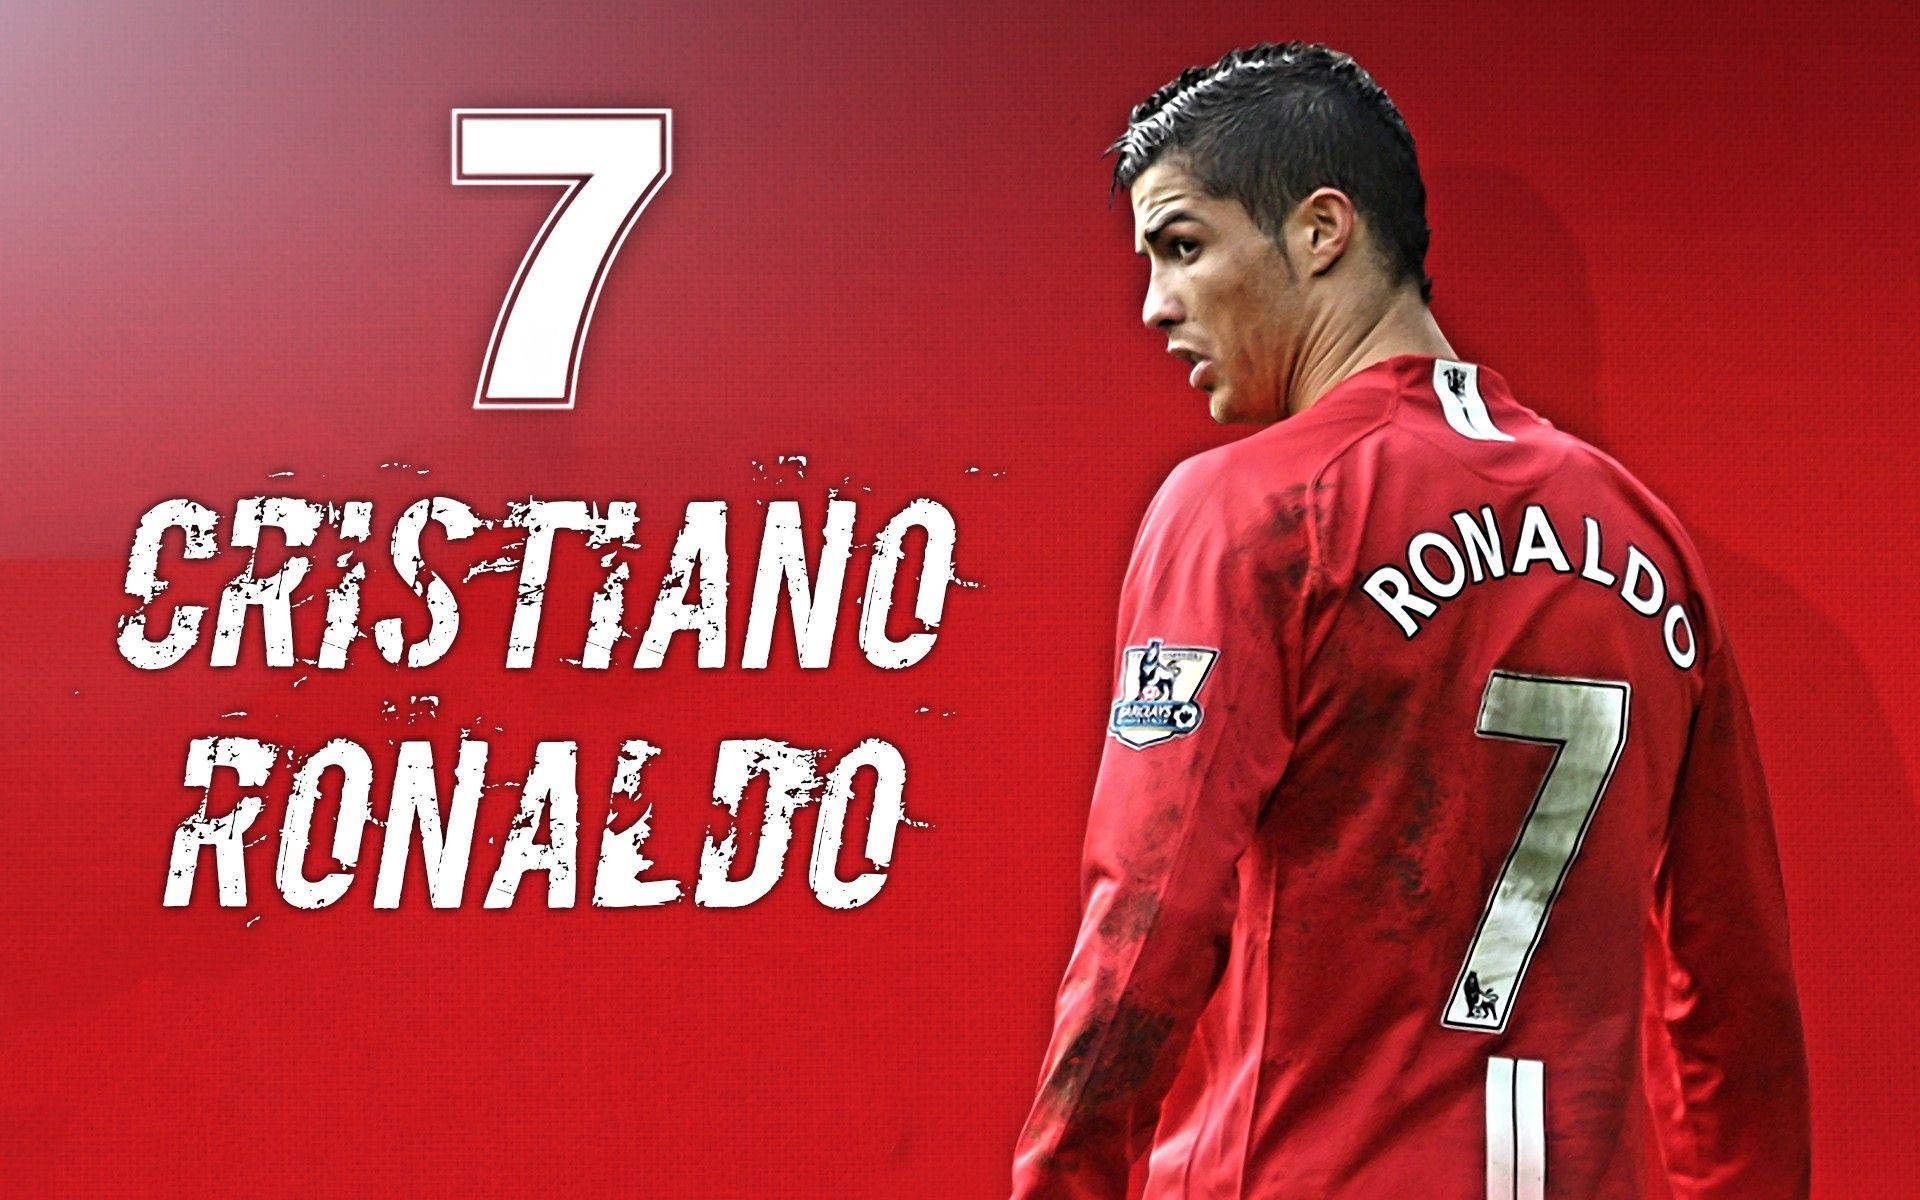 Cristiano Ronaldo Manchester United Wallpaper, HD Cristiano Ronaldo Manchester United Background on WallpaperBat